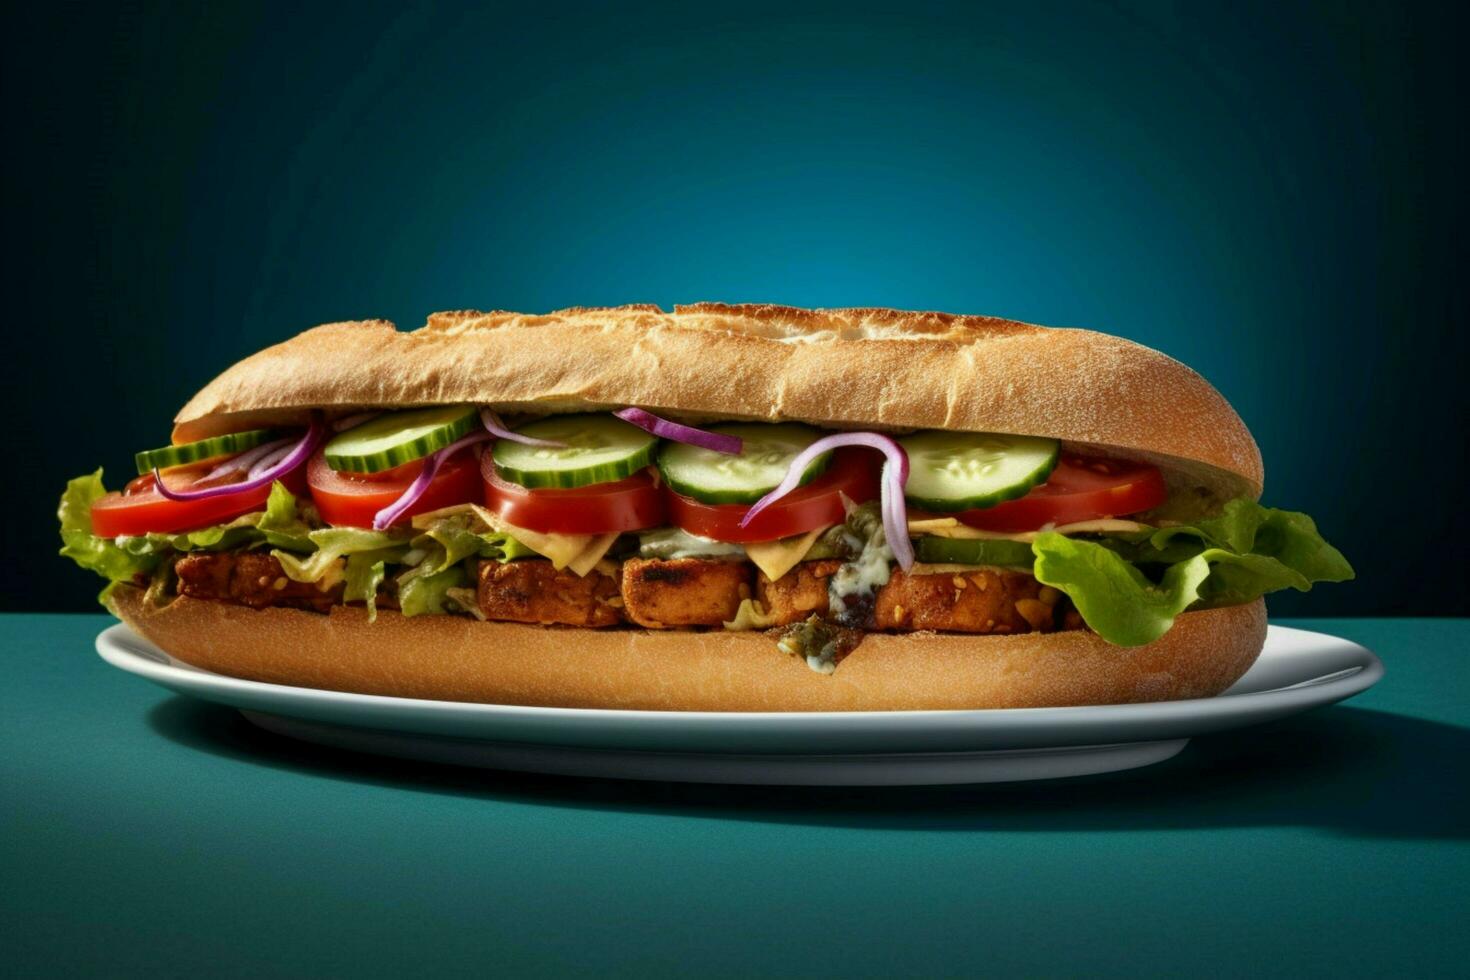 fresh vegan subway sandwich for a light and healt photo